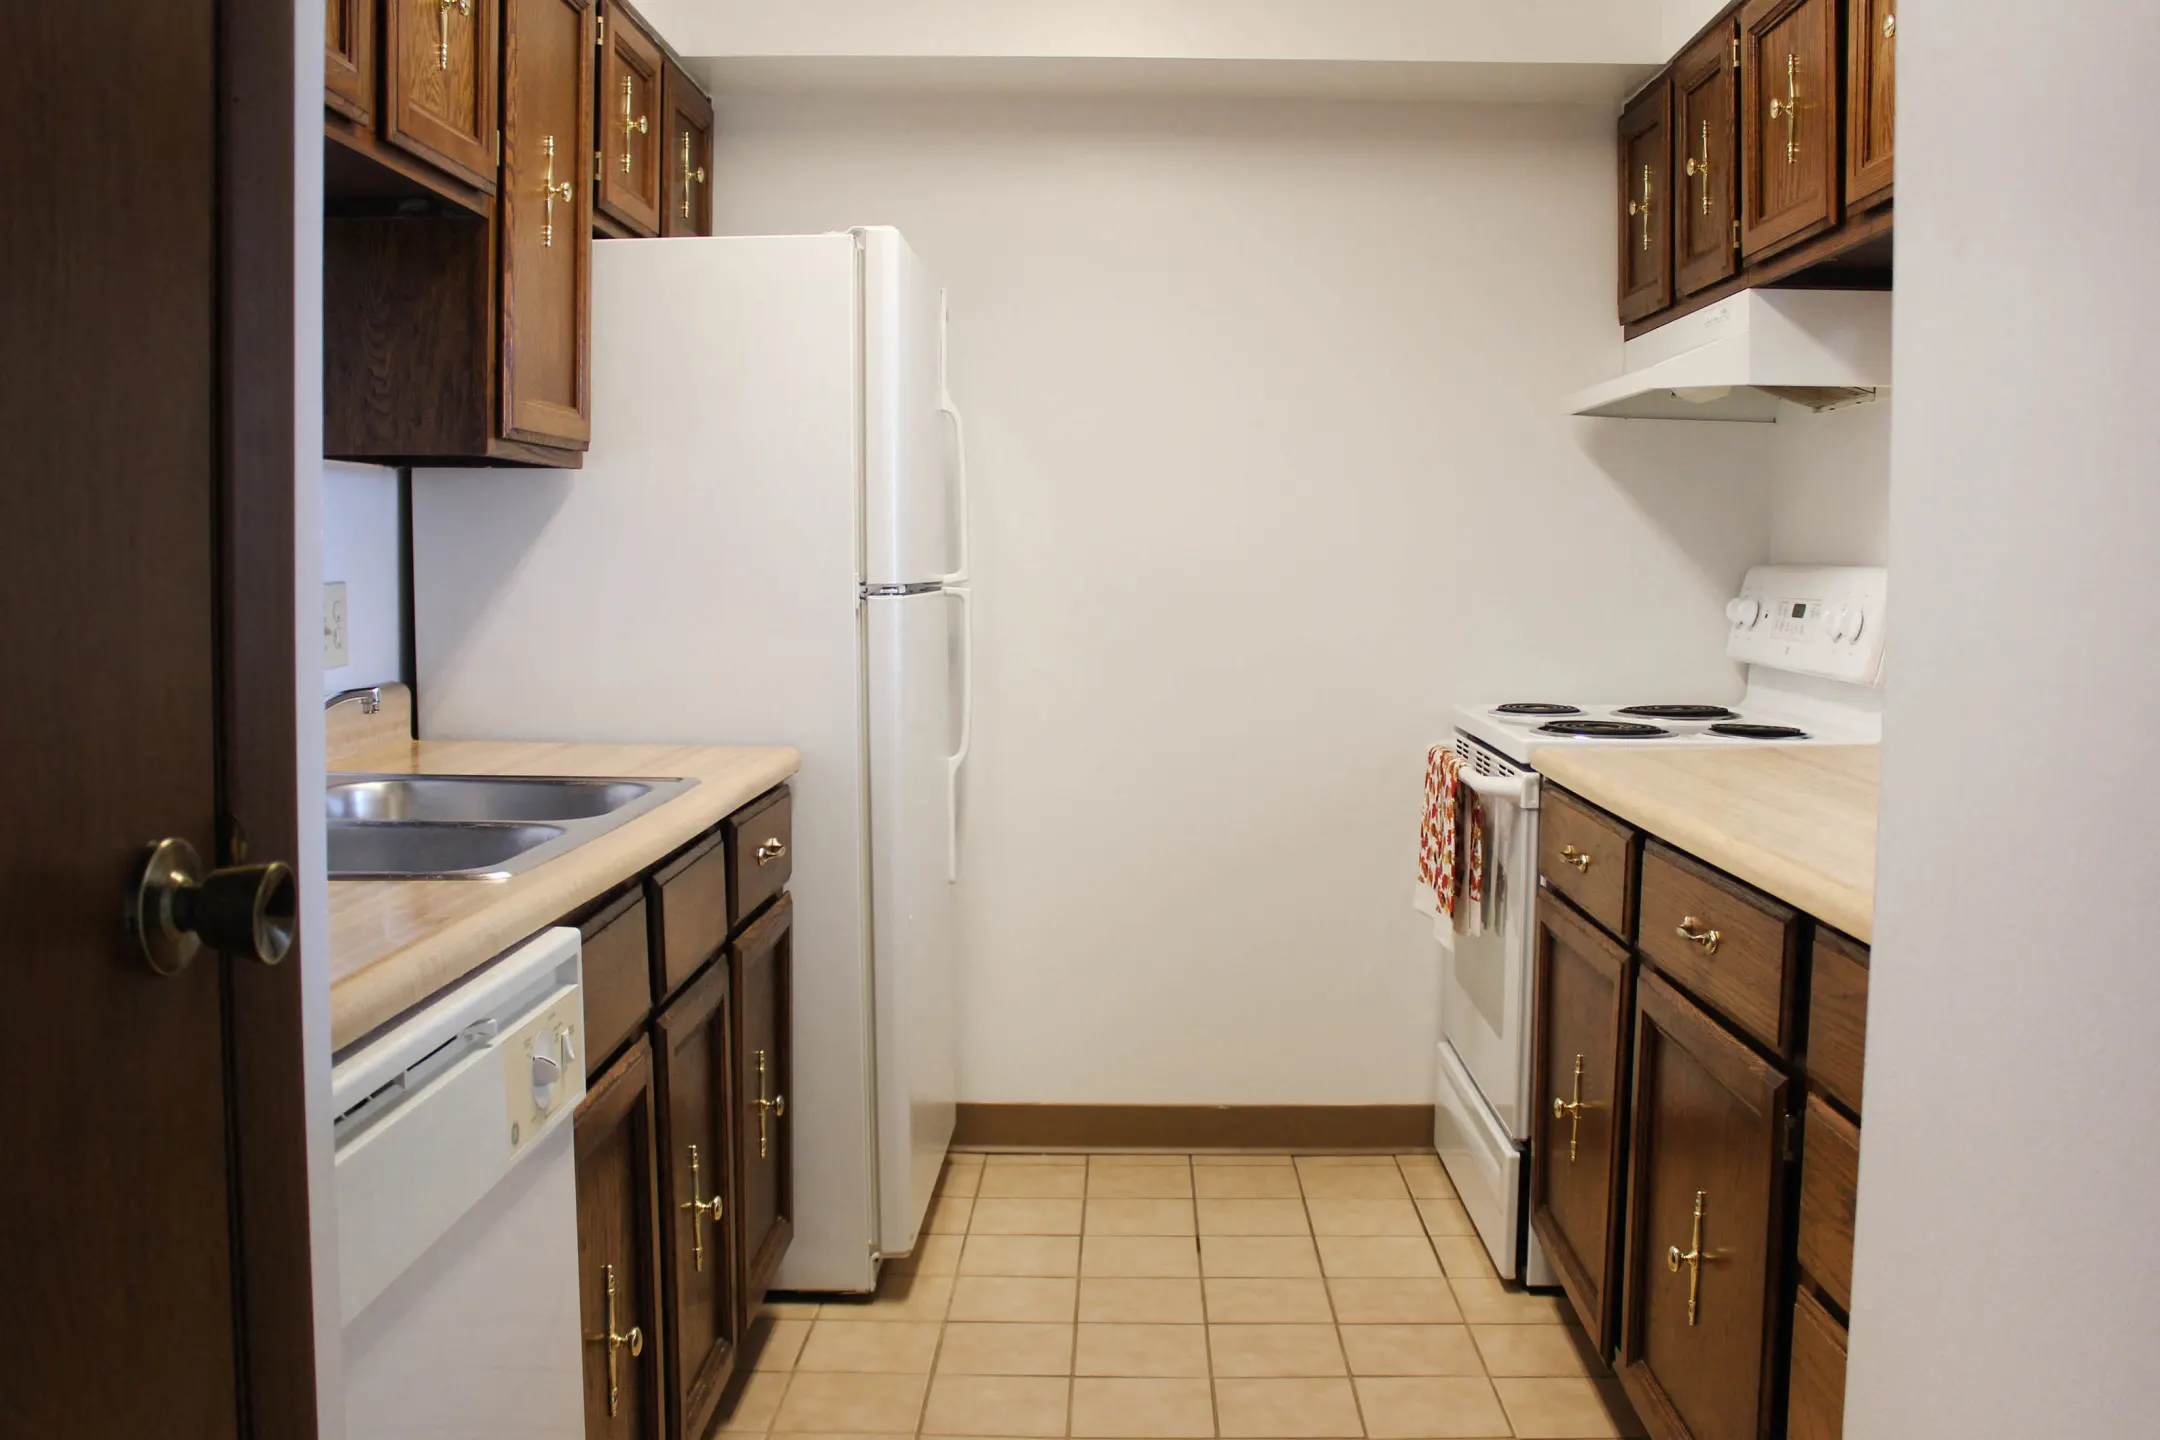 Kitchen - Indian Lookout Apartments - Cincinnati, OH